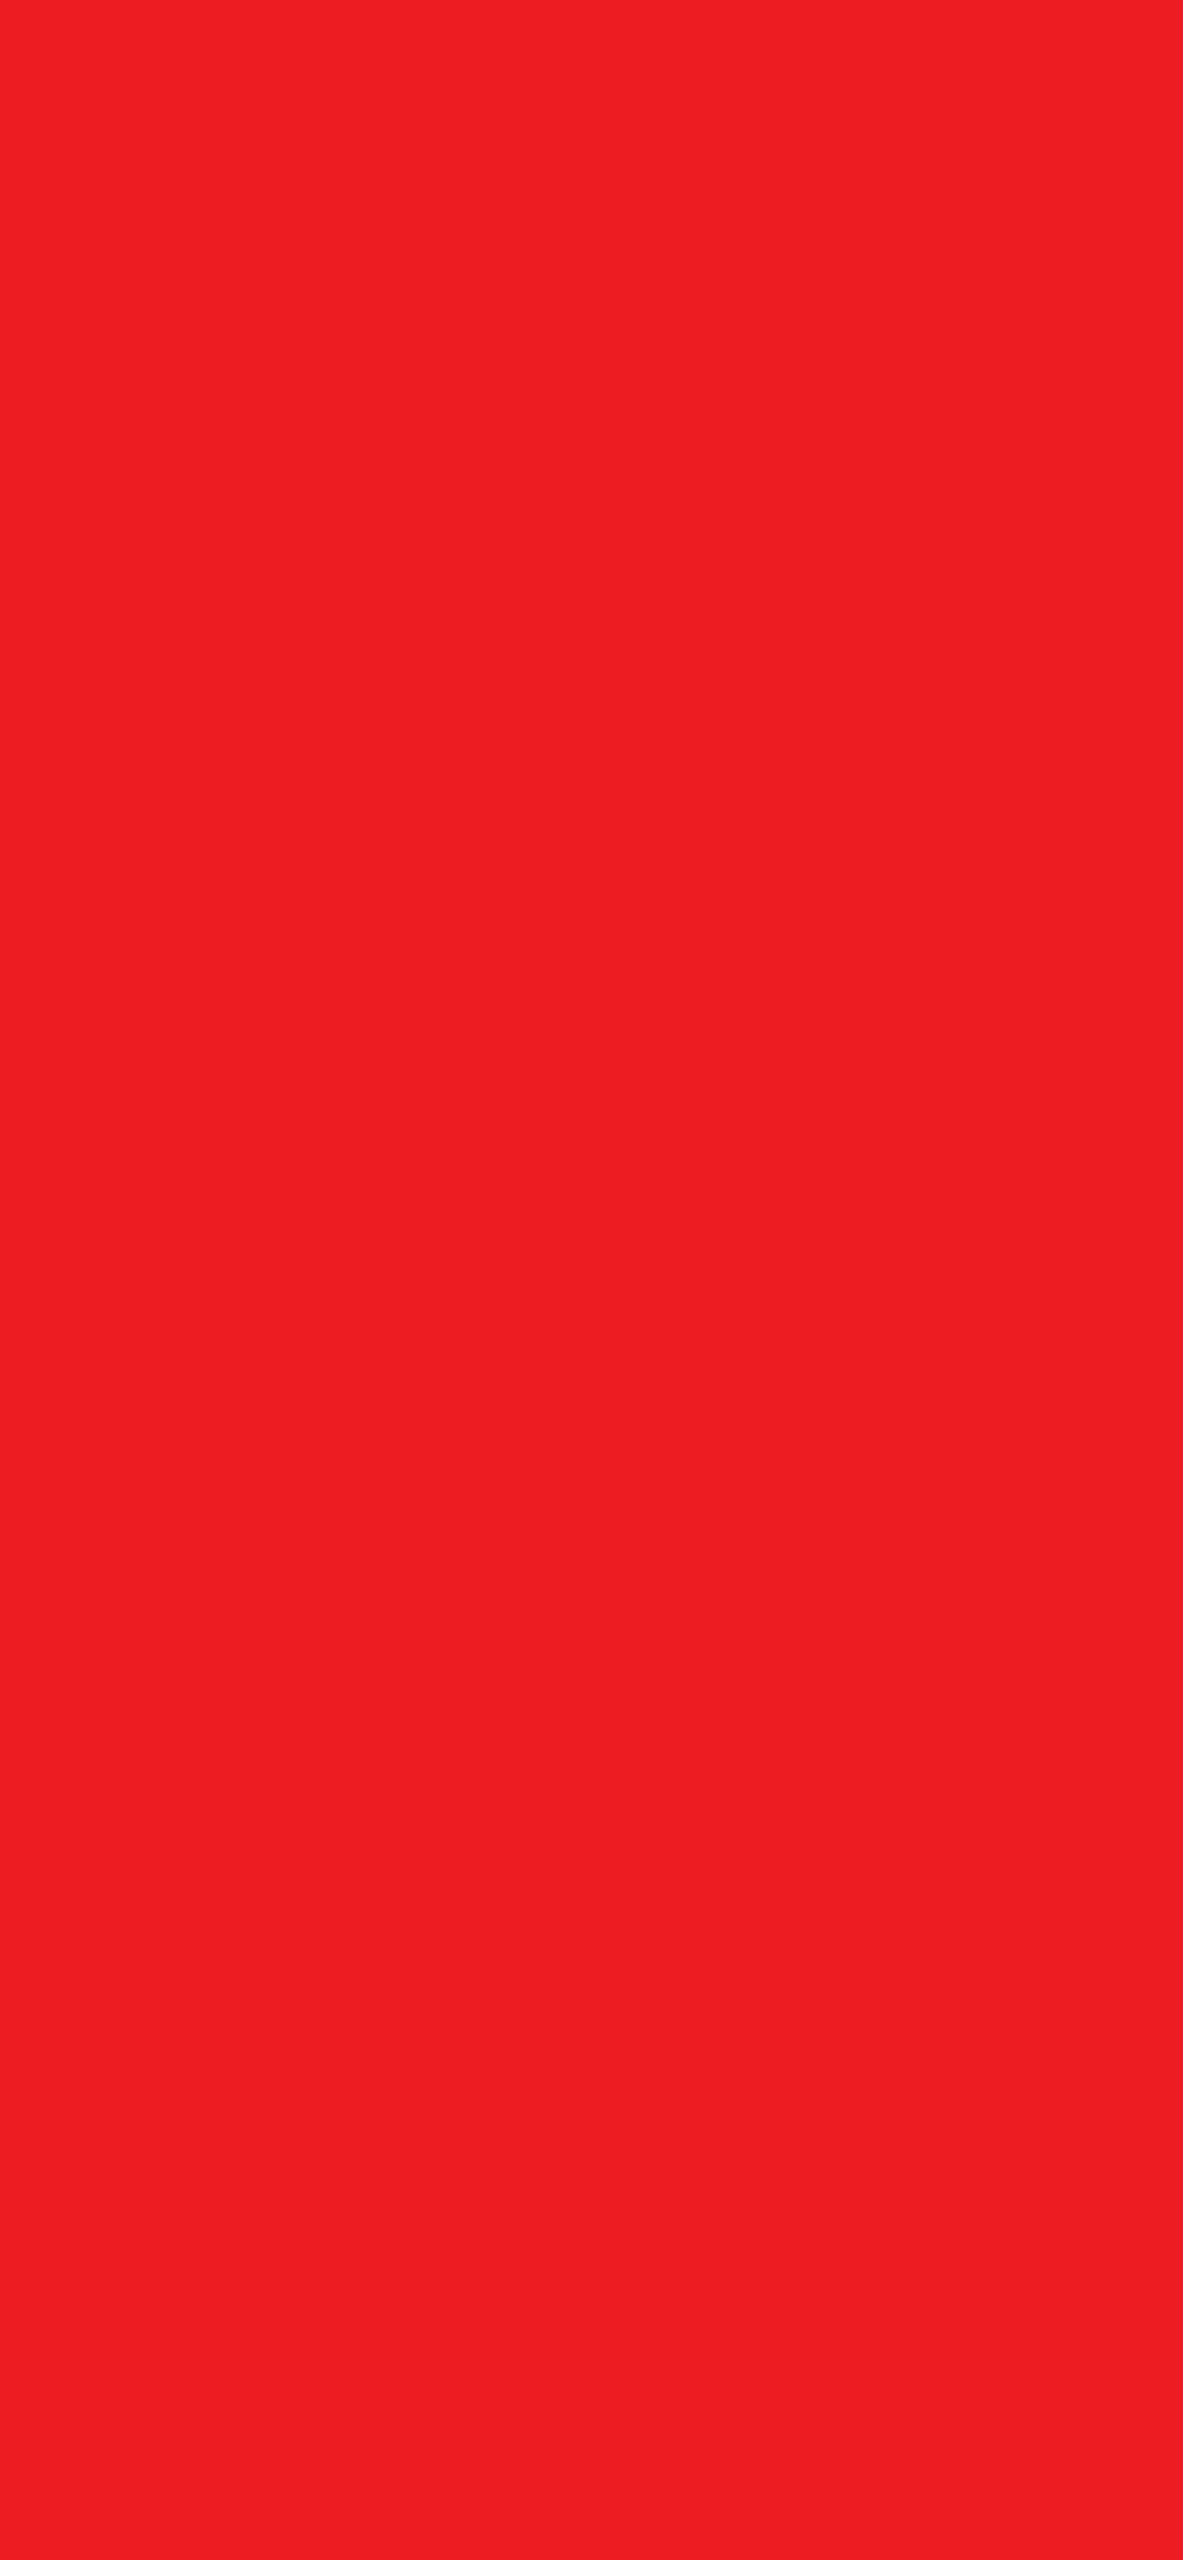 supreme logo red background